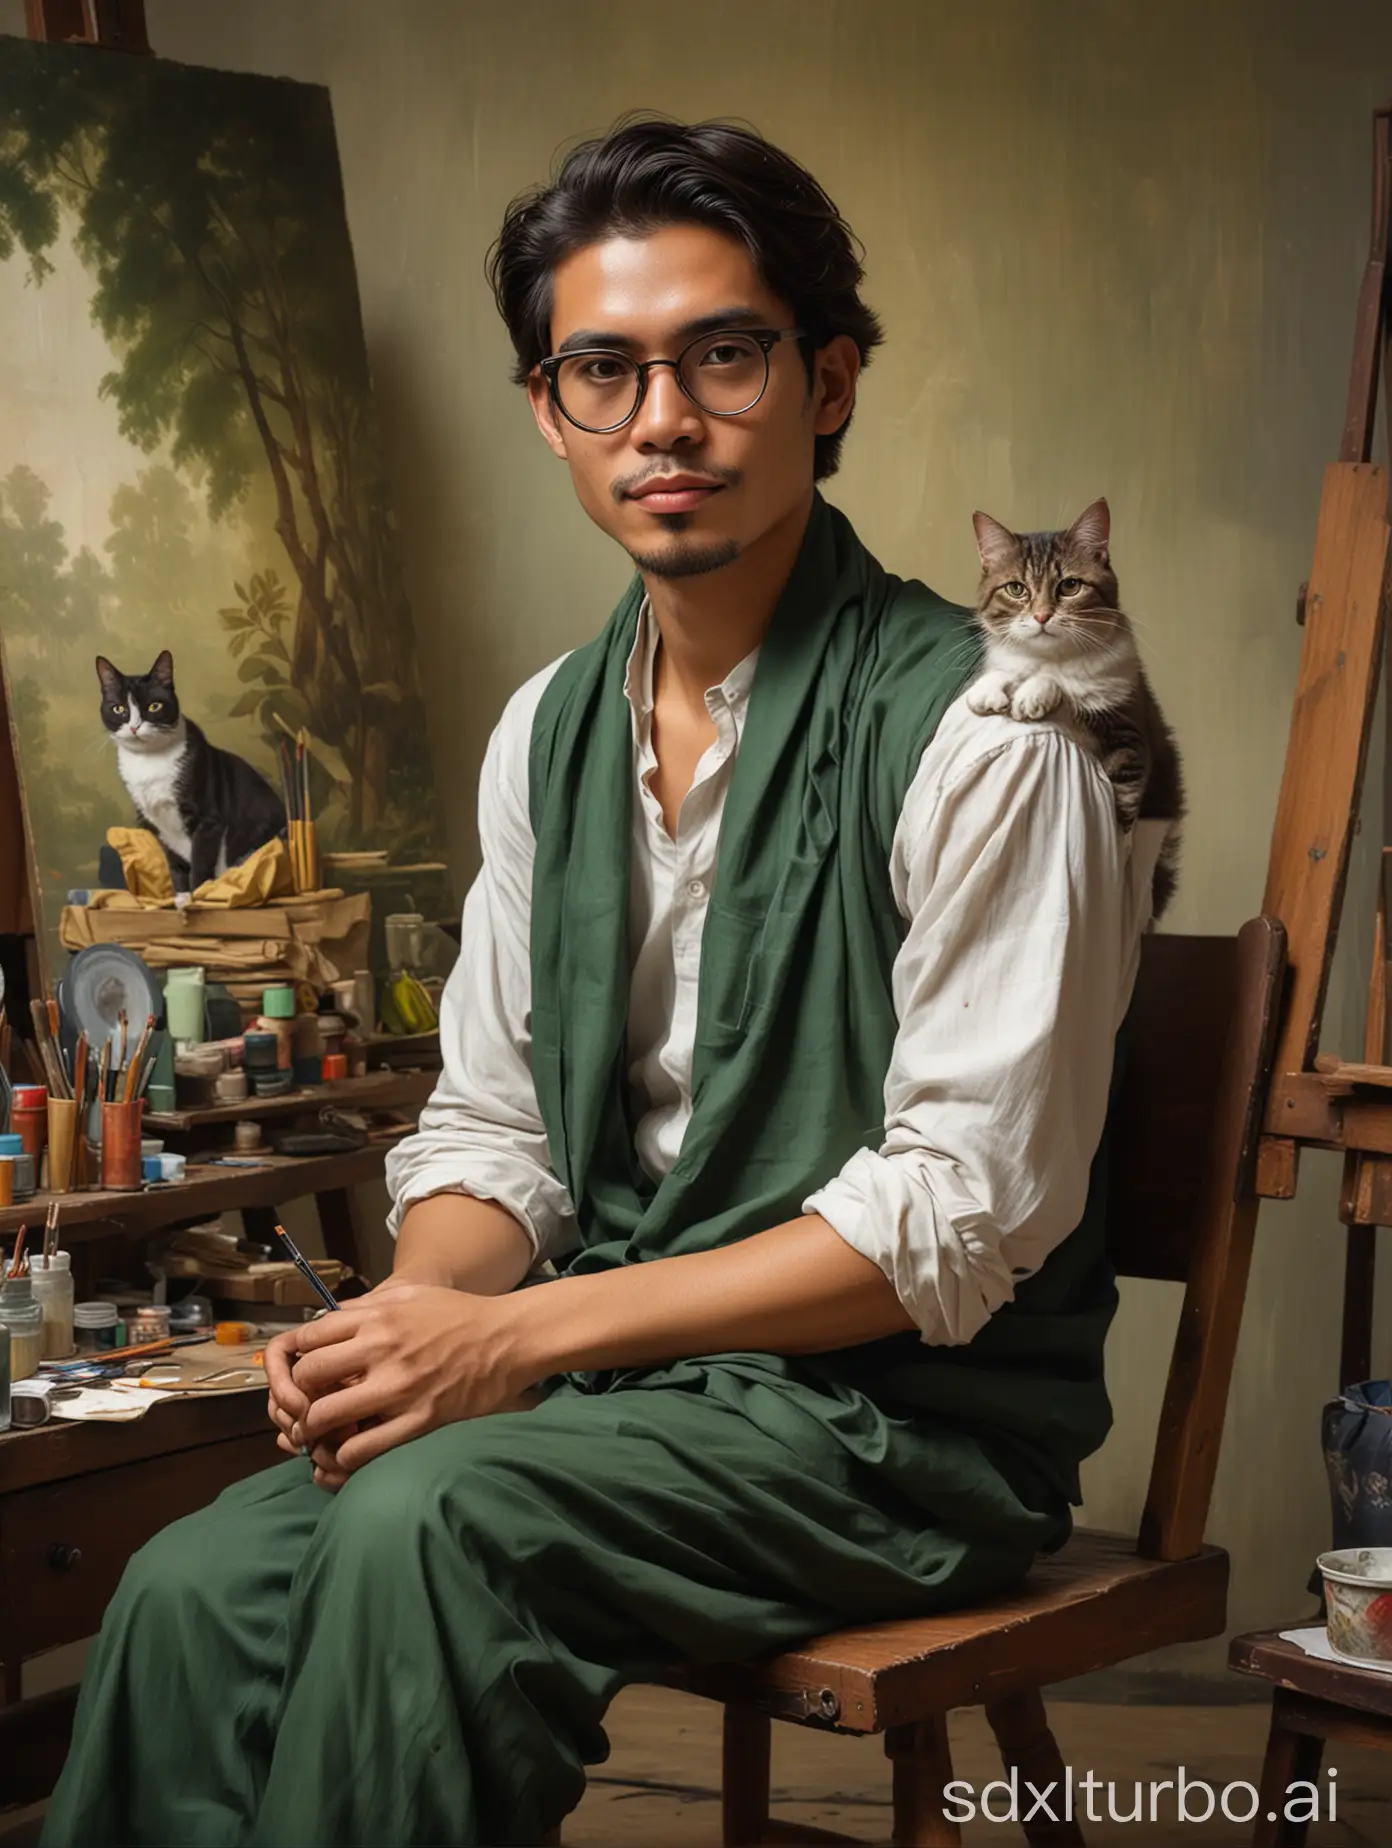 JavaThailand-Descent-Naturalist-Painter-in-Classic-Studio-with-Cat-Companion